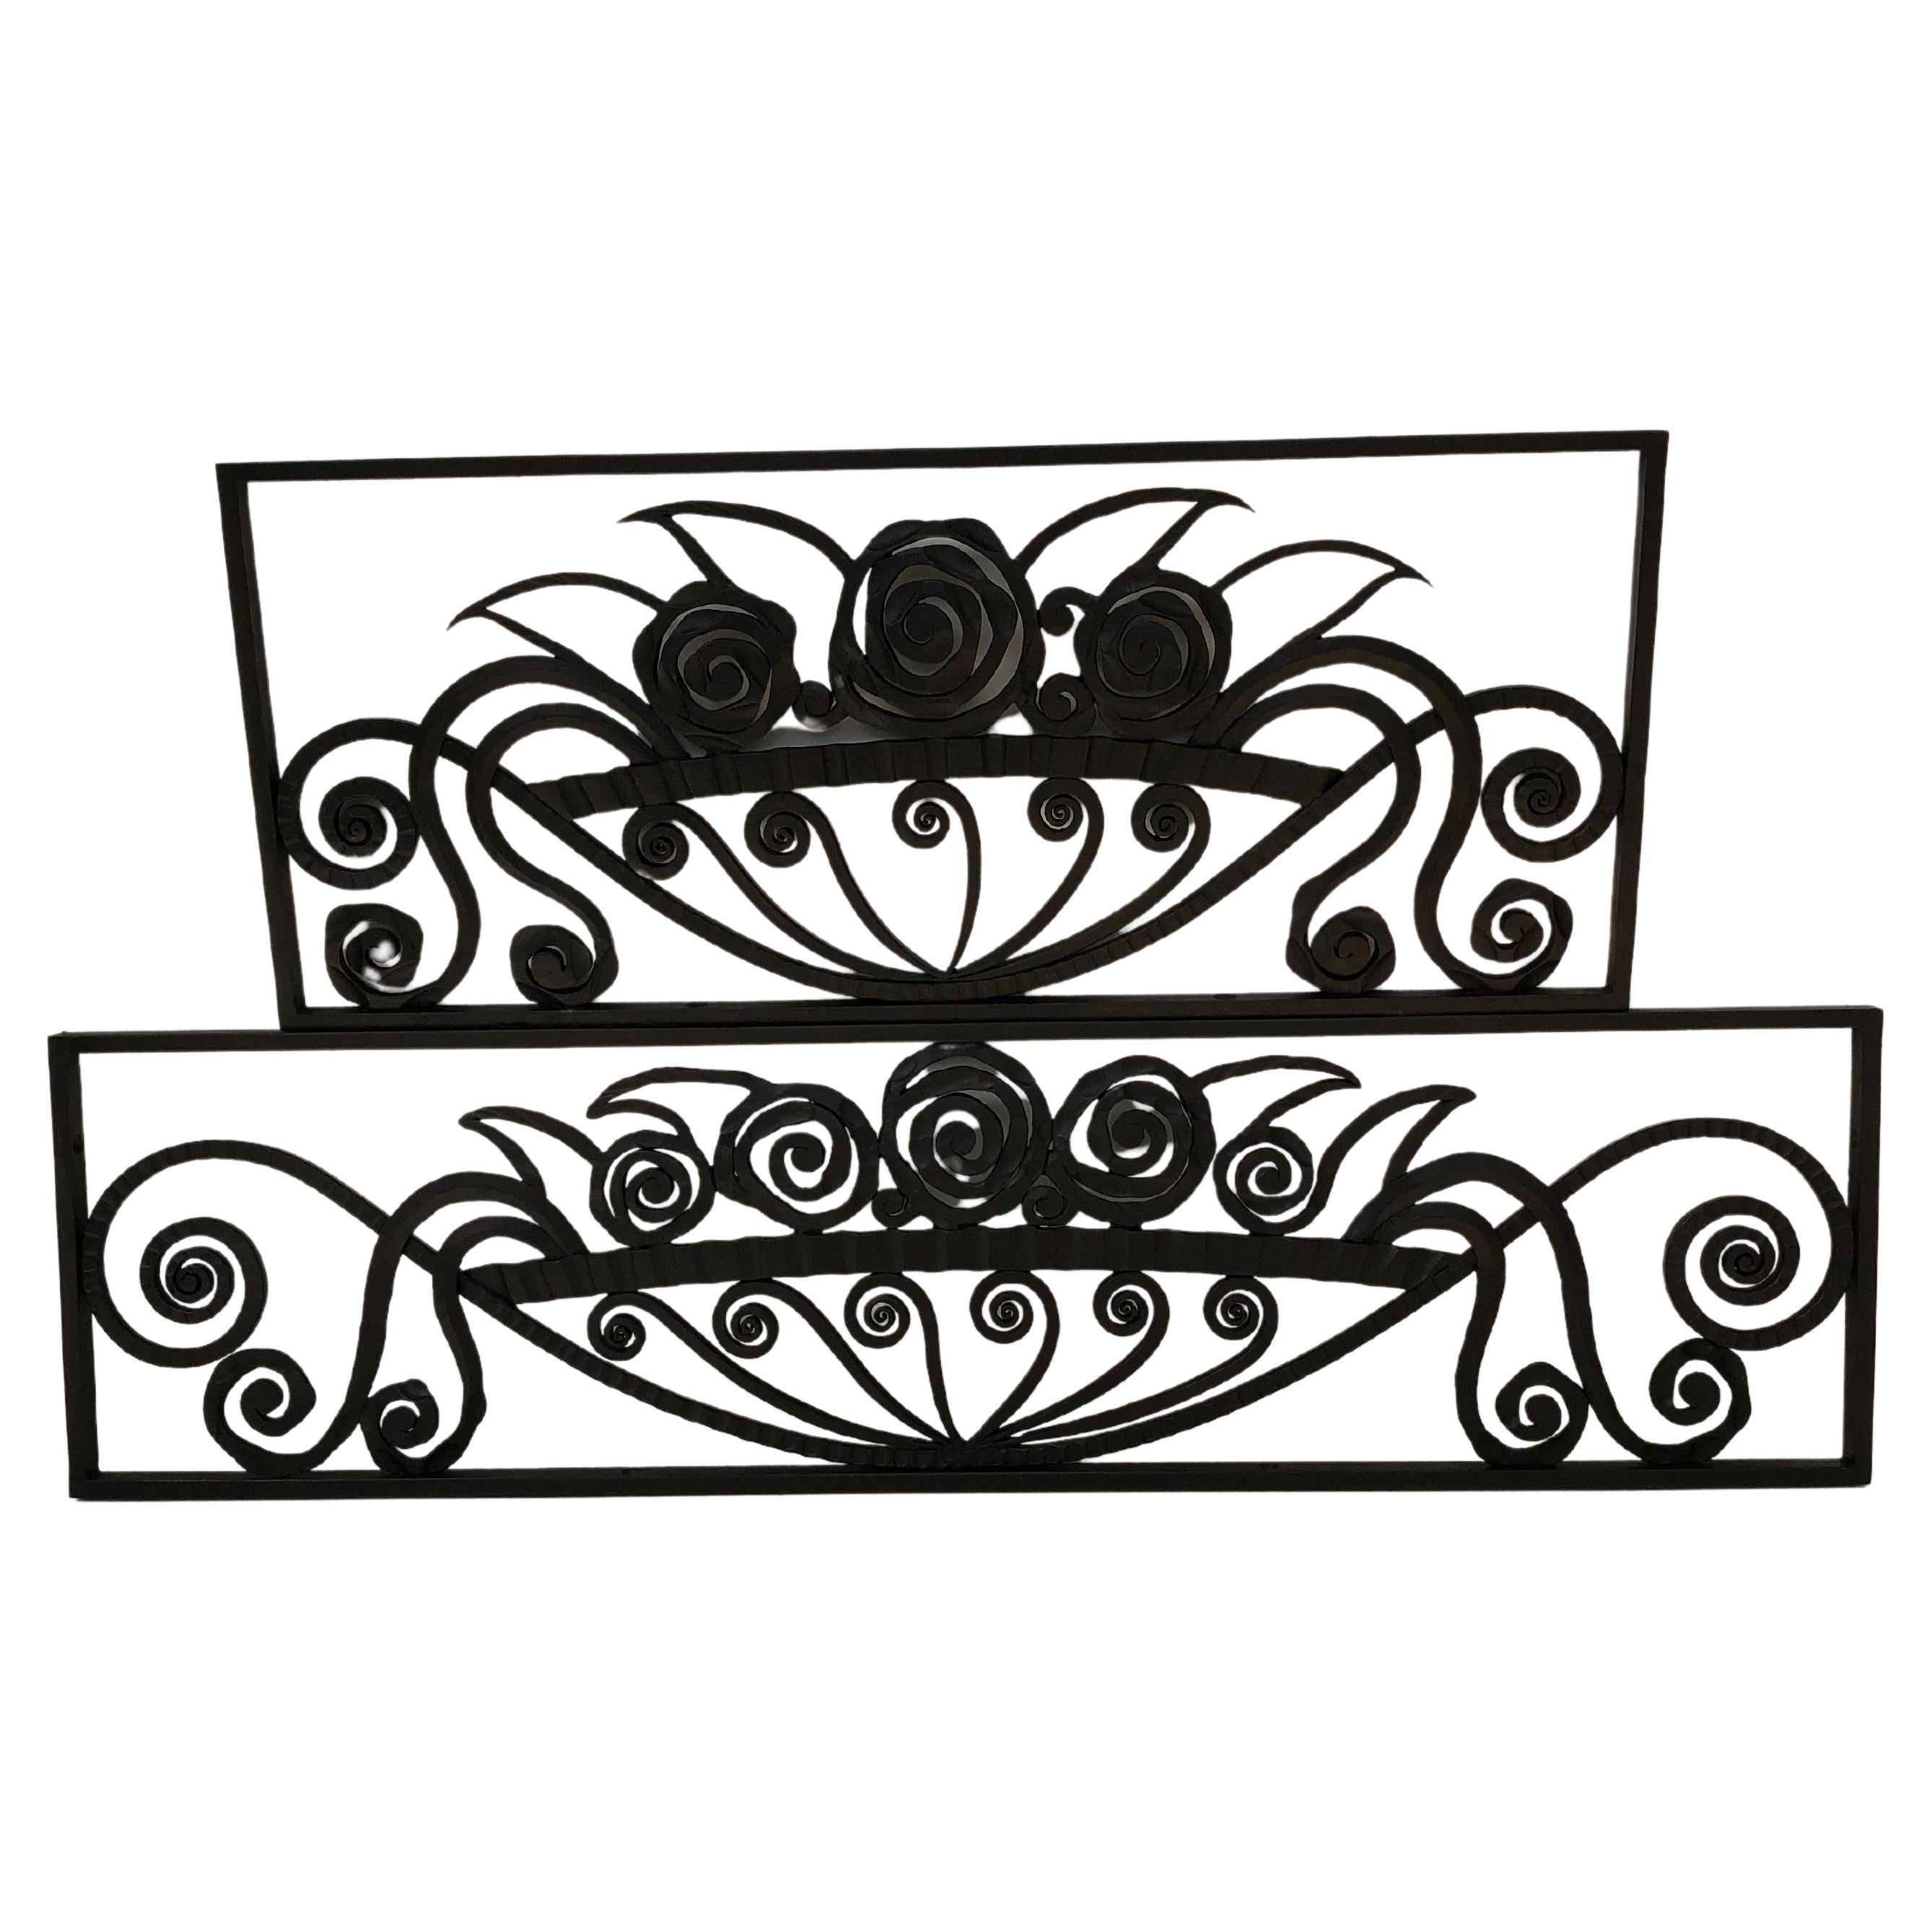 Paul Kiss 2 decorative elements Art Deco wrought iron door transom For Sale